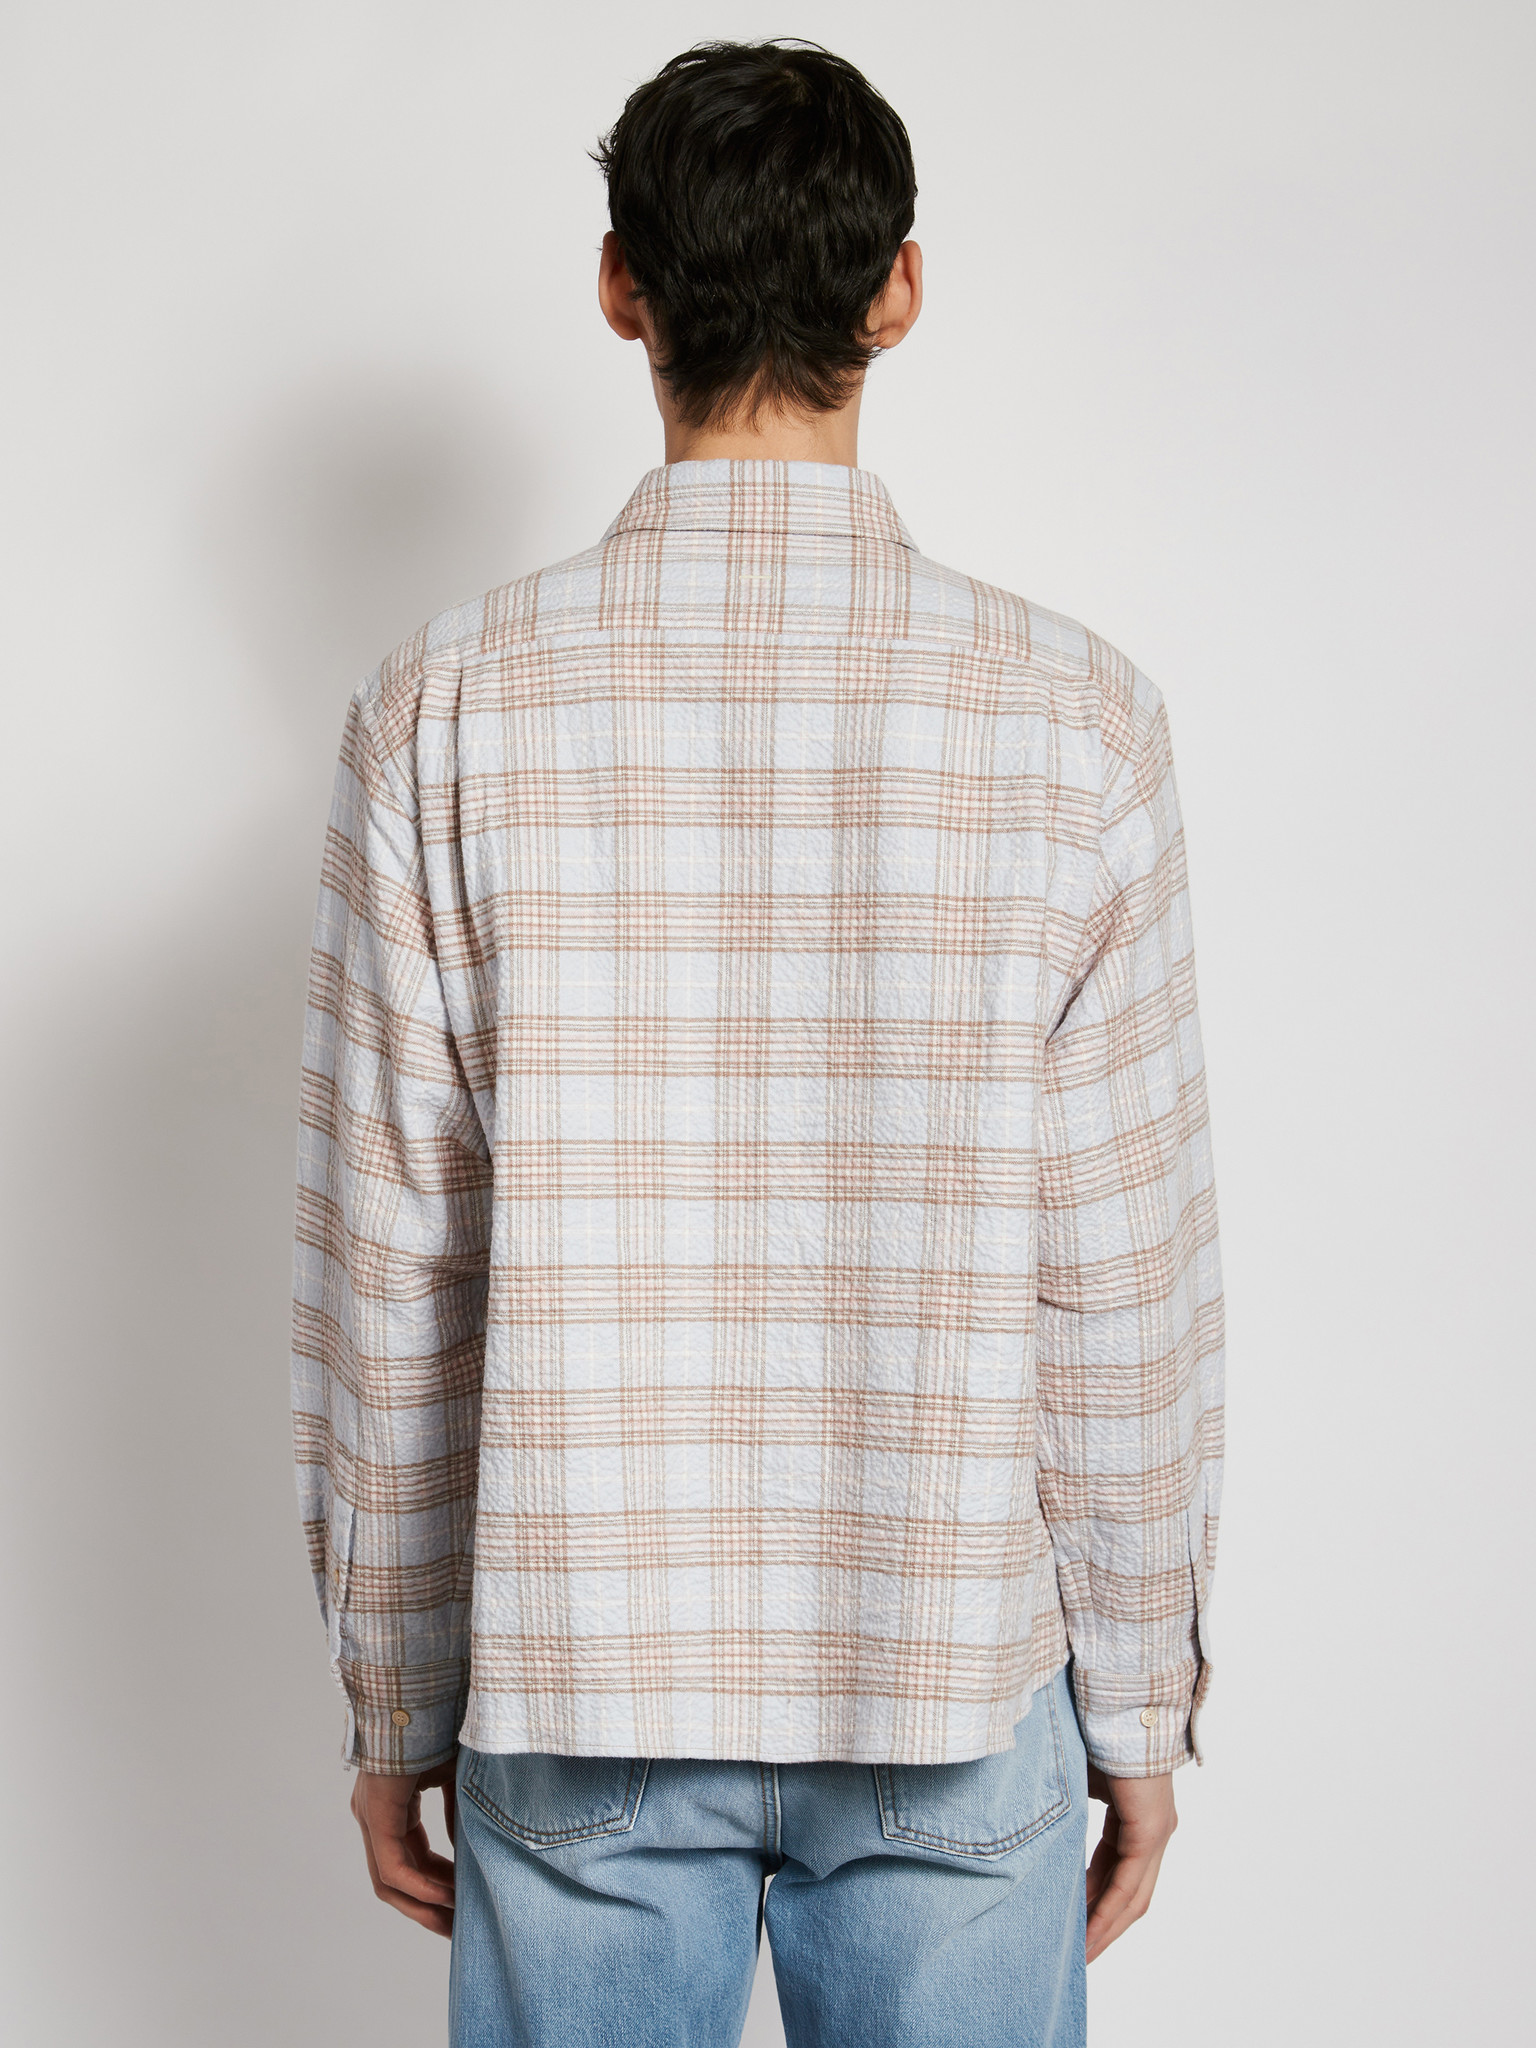 Acne Studio: Pale Blue / Pink Squared Plaid Shirt | Men's Designer